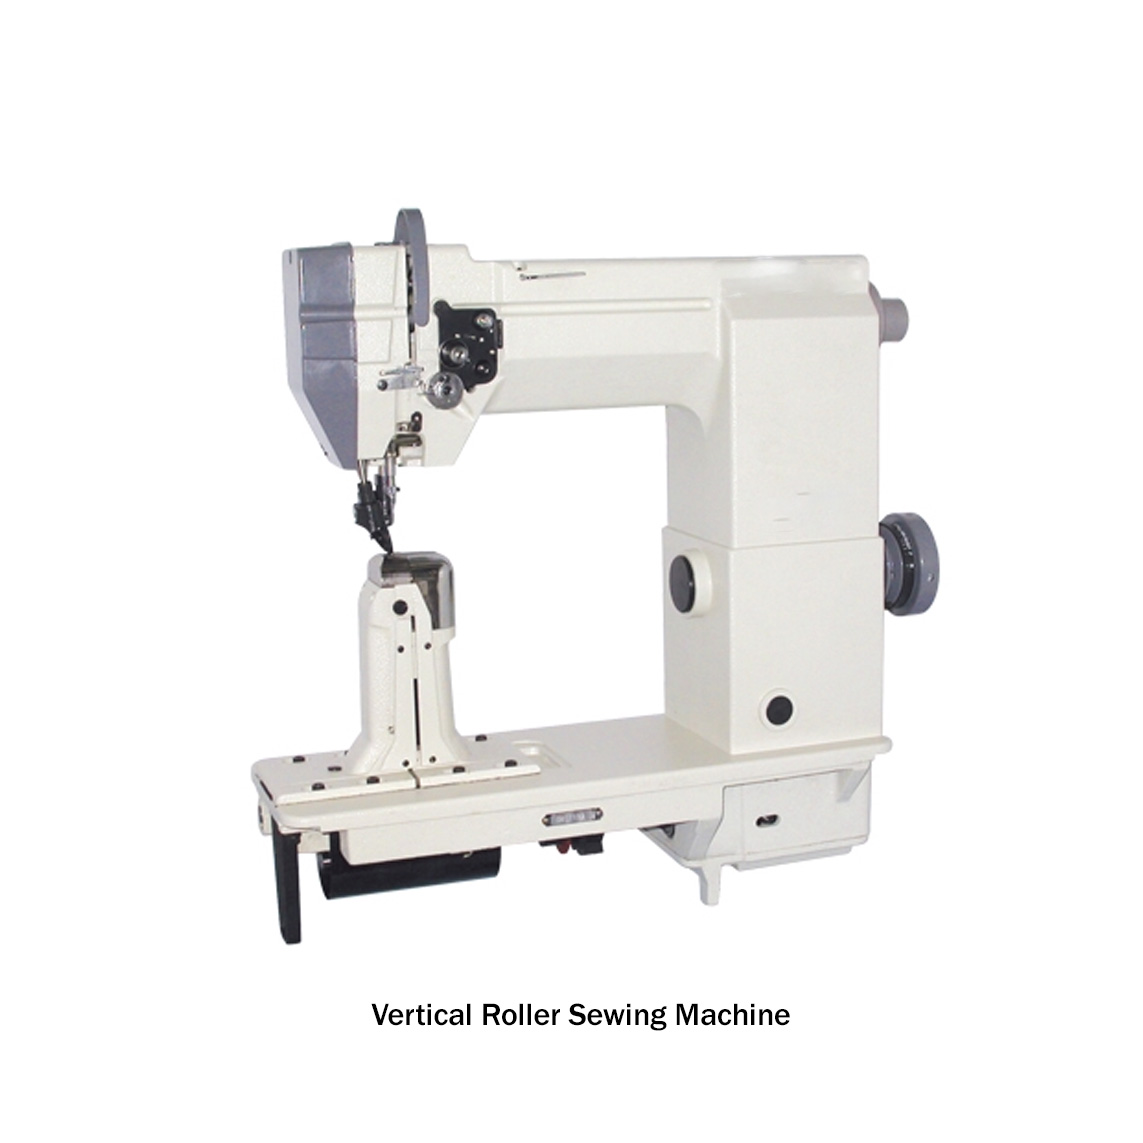 Vertical Roller Sewing Machine